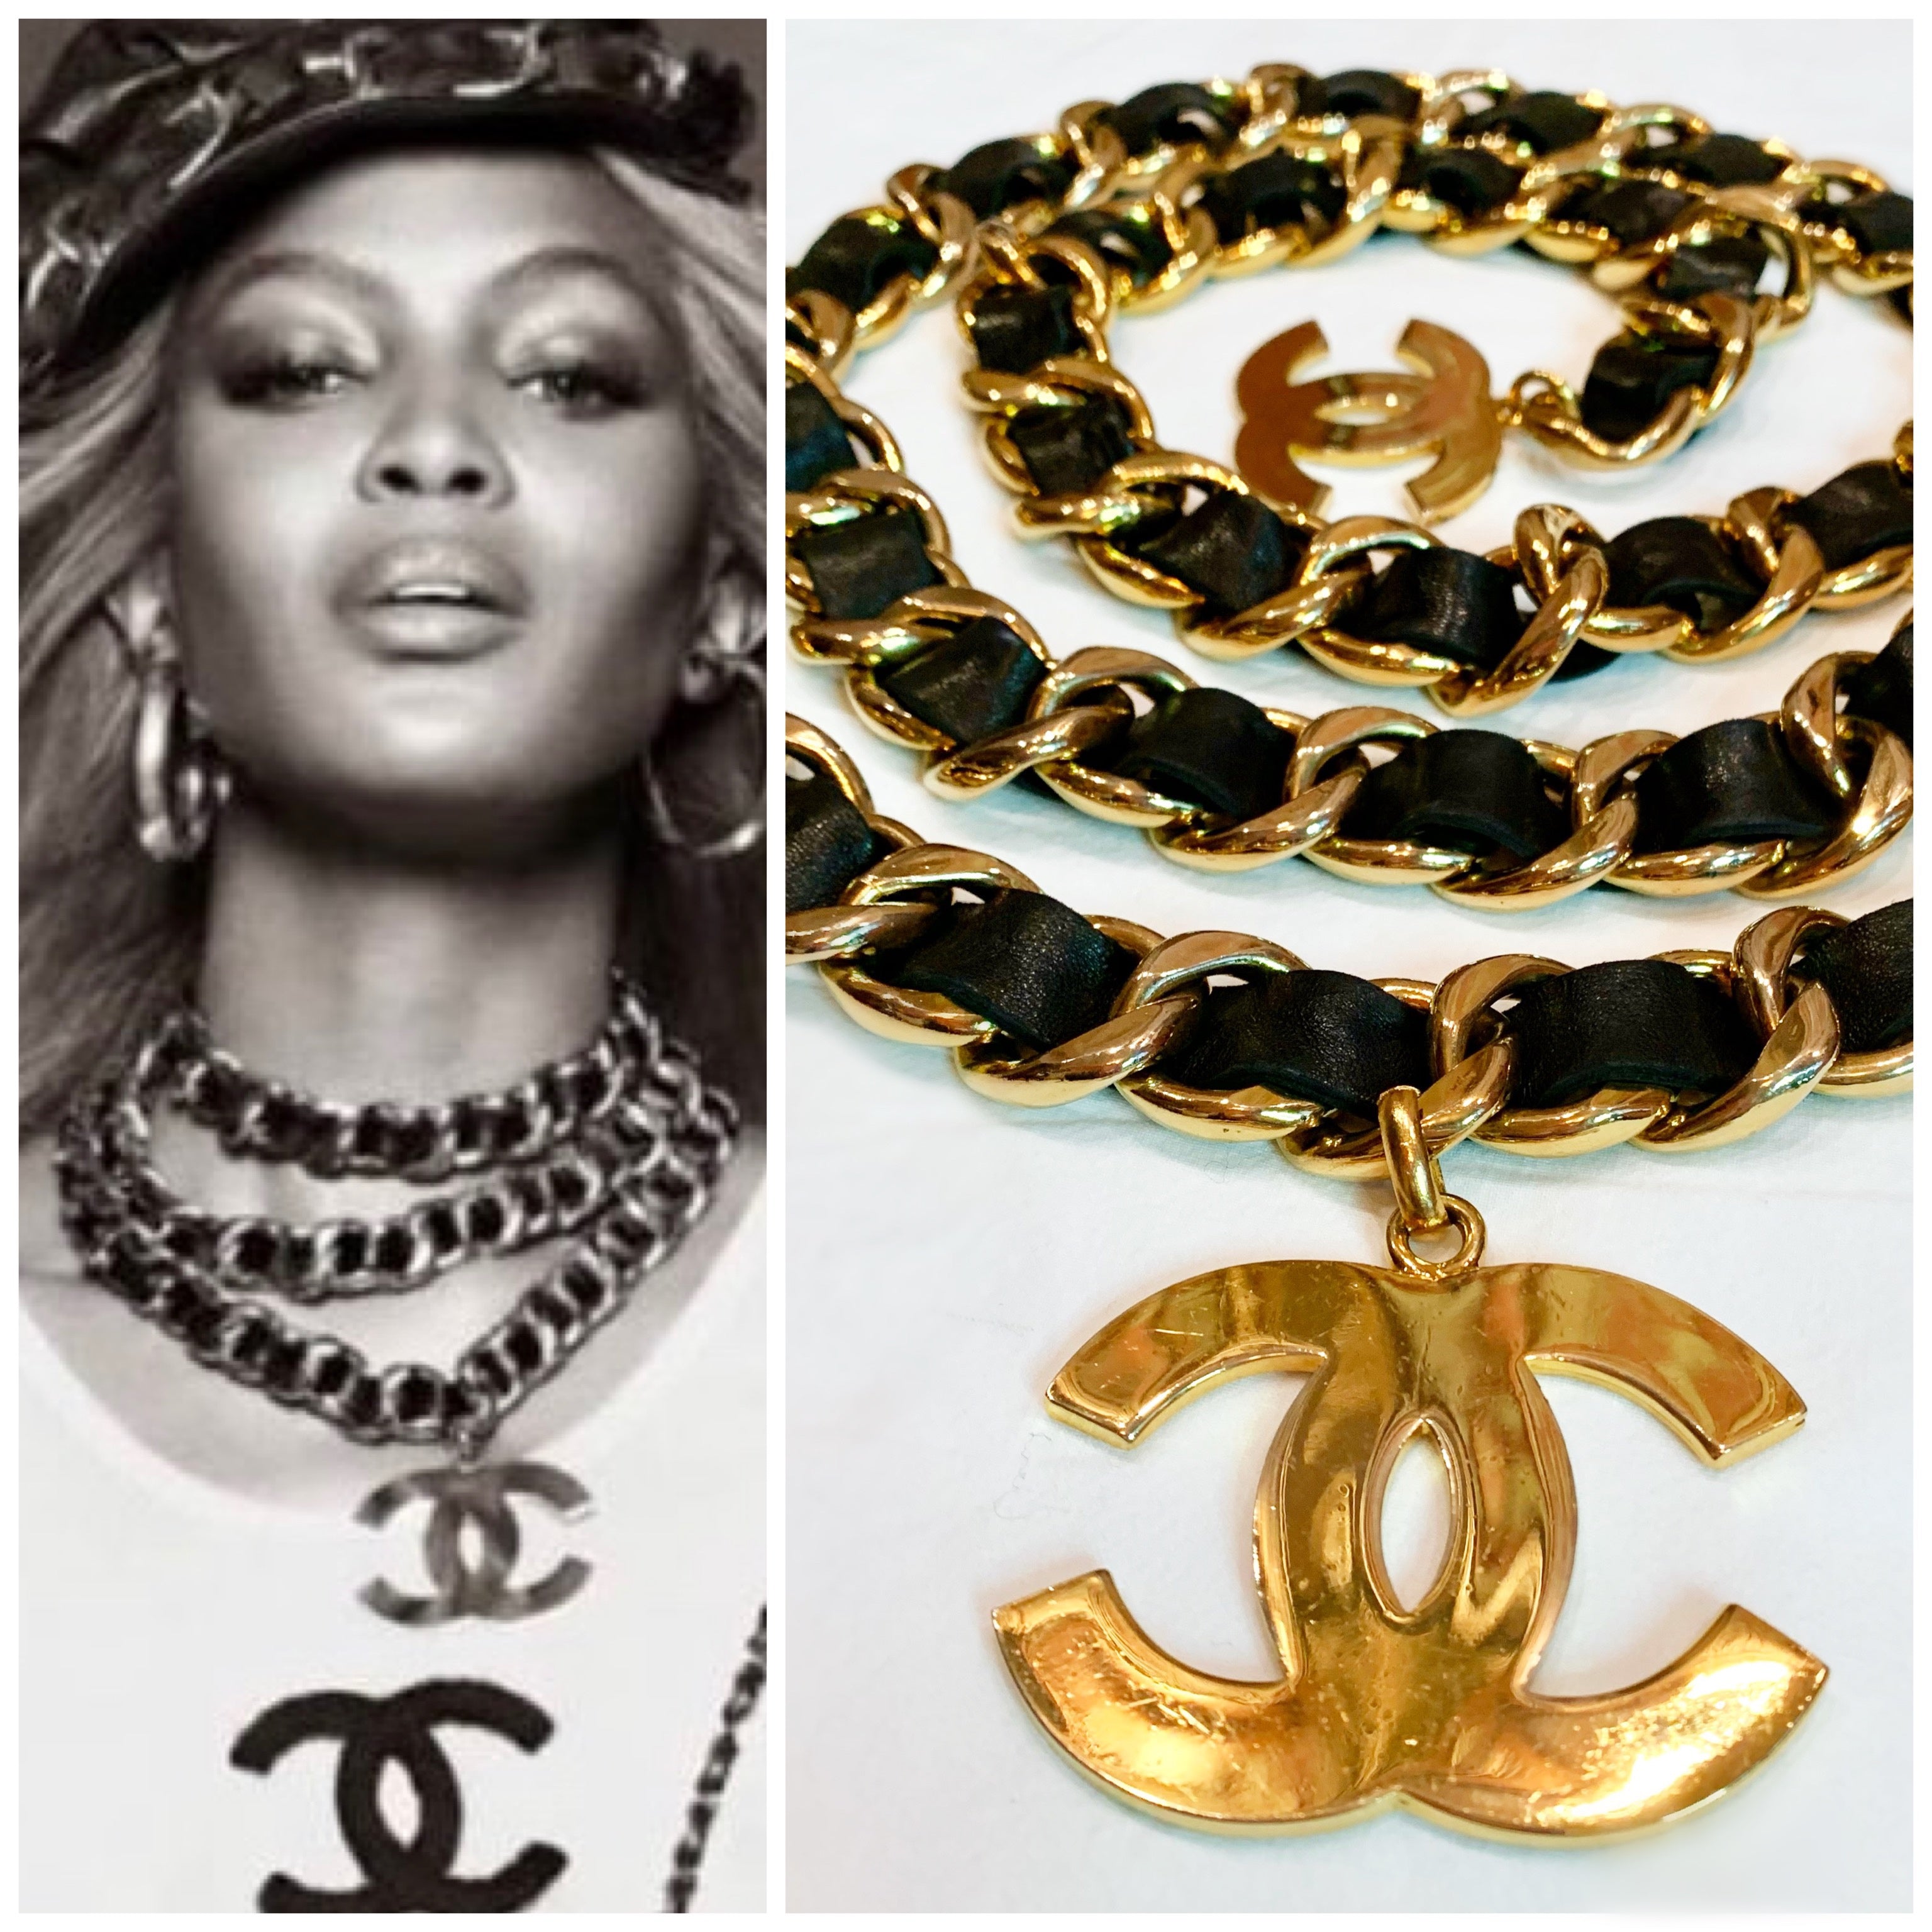 Chanel Black Leather & Gold 'CC' Chain Belt Q6A01M17KB157